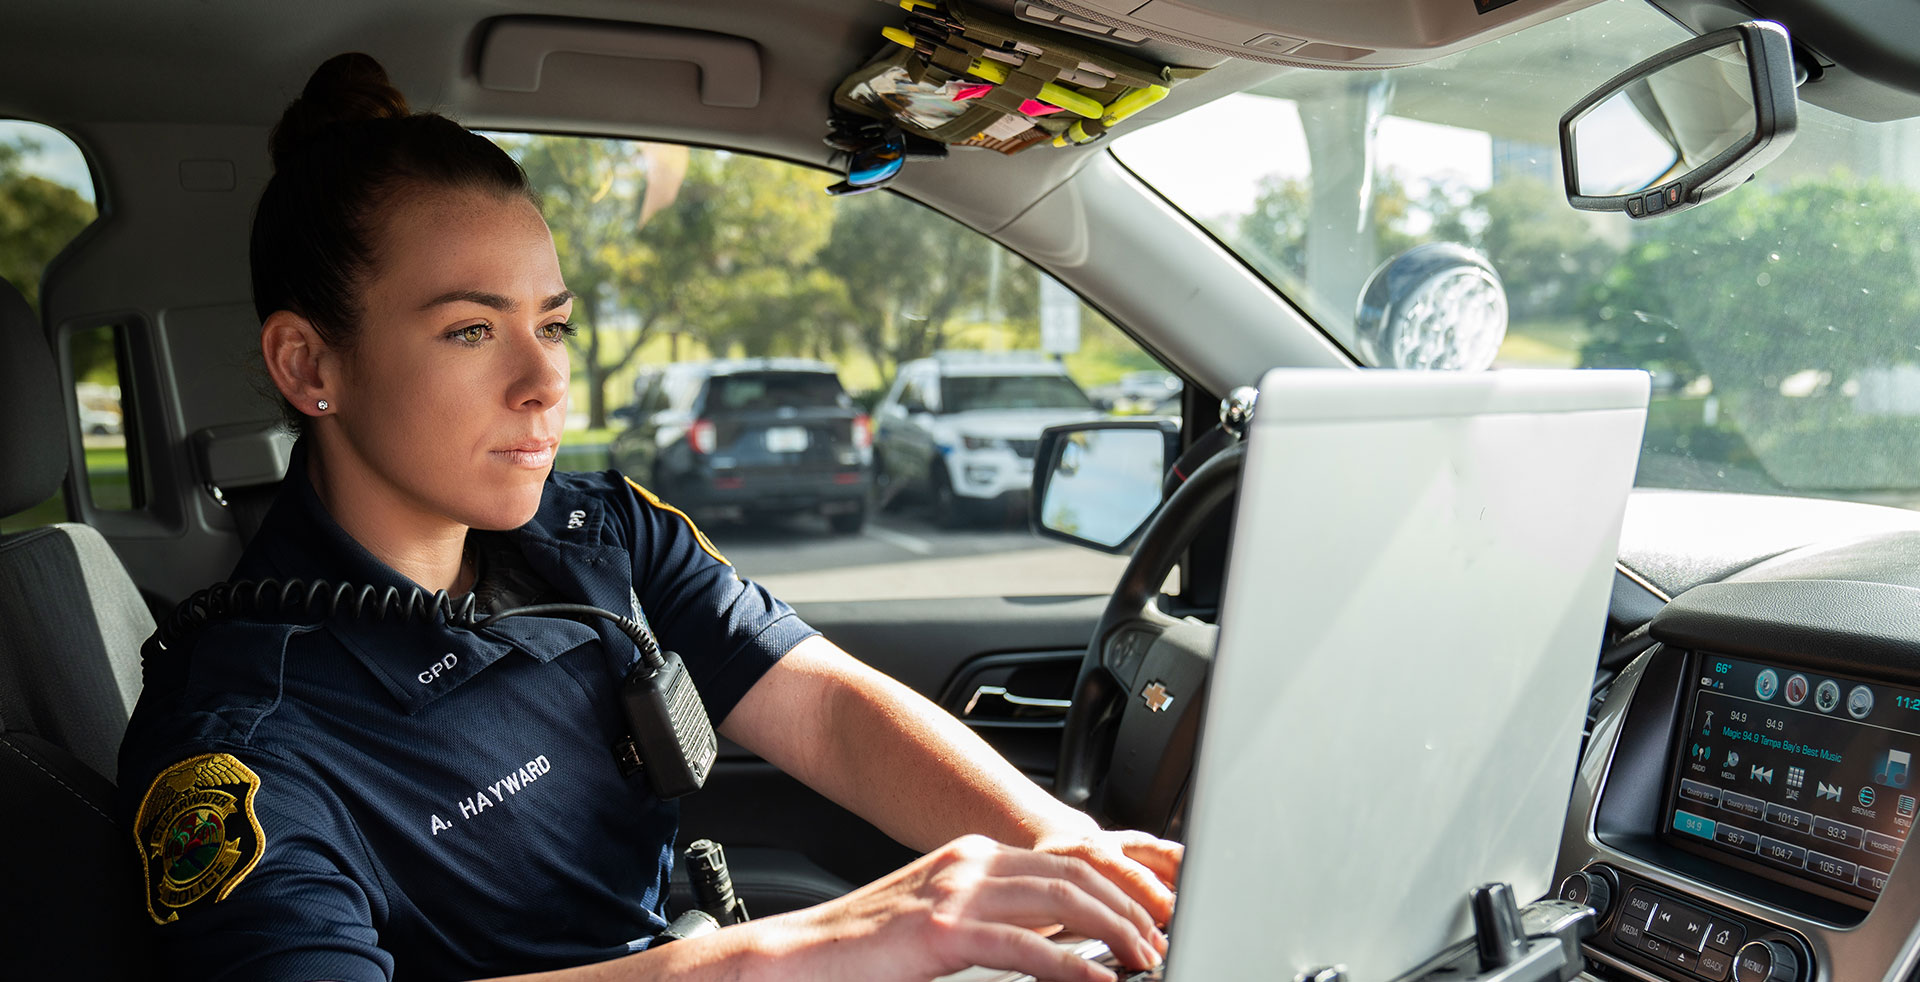 Officer at computer in patrol car